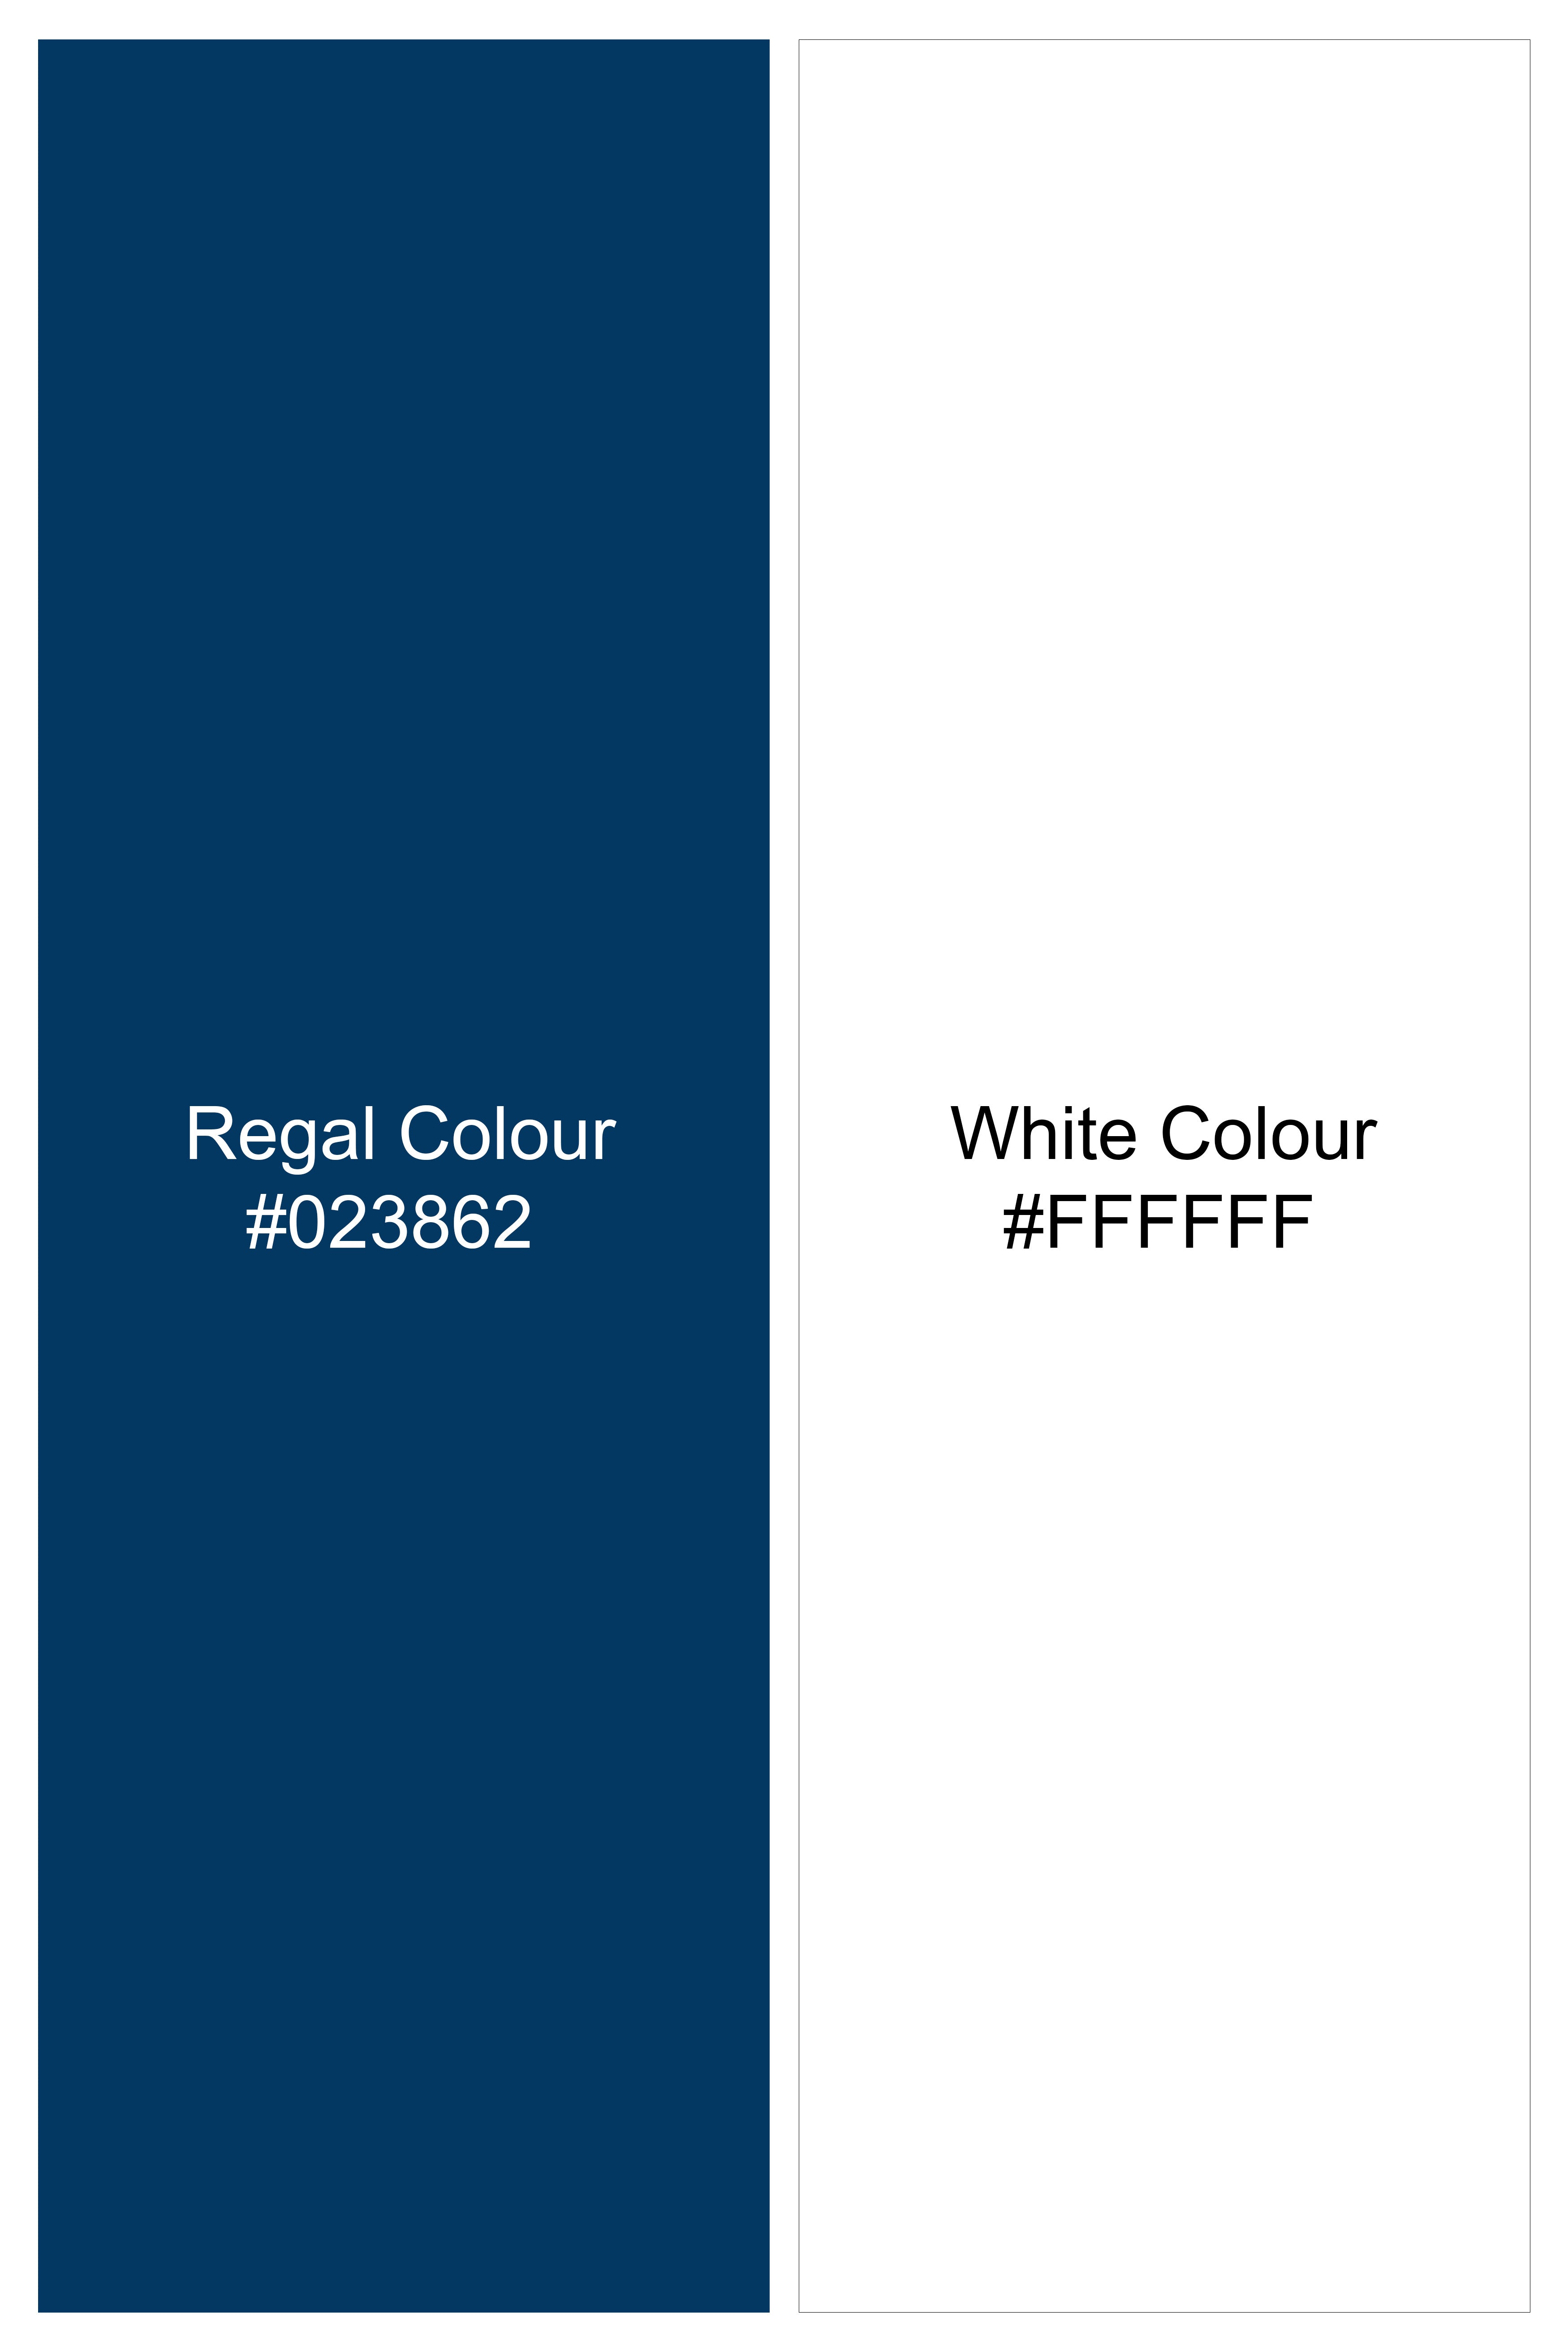  Regal Blue and White Striped Printed with White Cuffs and Collar Subtle Sheen Super Soft Premium Cotton Designer Shirt 12129-WCC-38, 12129-WCC-H-38, 12129-WCC-39, 12129-WCC-H-39, 12129-WCC-40, 12129-WCC-H-40, 12129-WCC-42, 12129-WCC-H-42, 12129-WCC-44, 12129-WCC-H-44, 12129-WCC-46, 12129-WCC-H-46, 12129-WCC-48, 12129-WCC-H-48, 12129-WCC-50, 12129-WCC-H-50, 12129-WCC-52, 12129-WCC-H-52